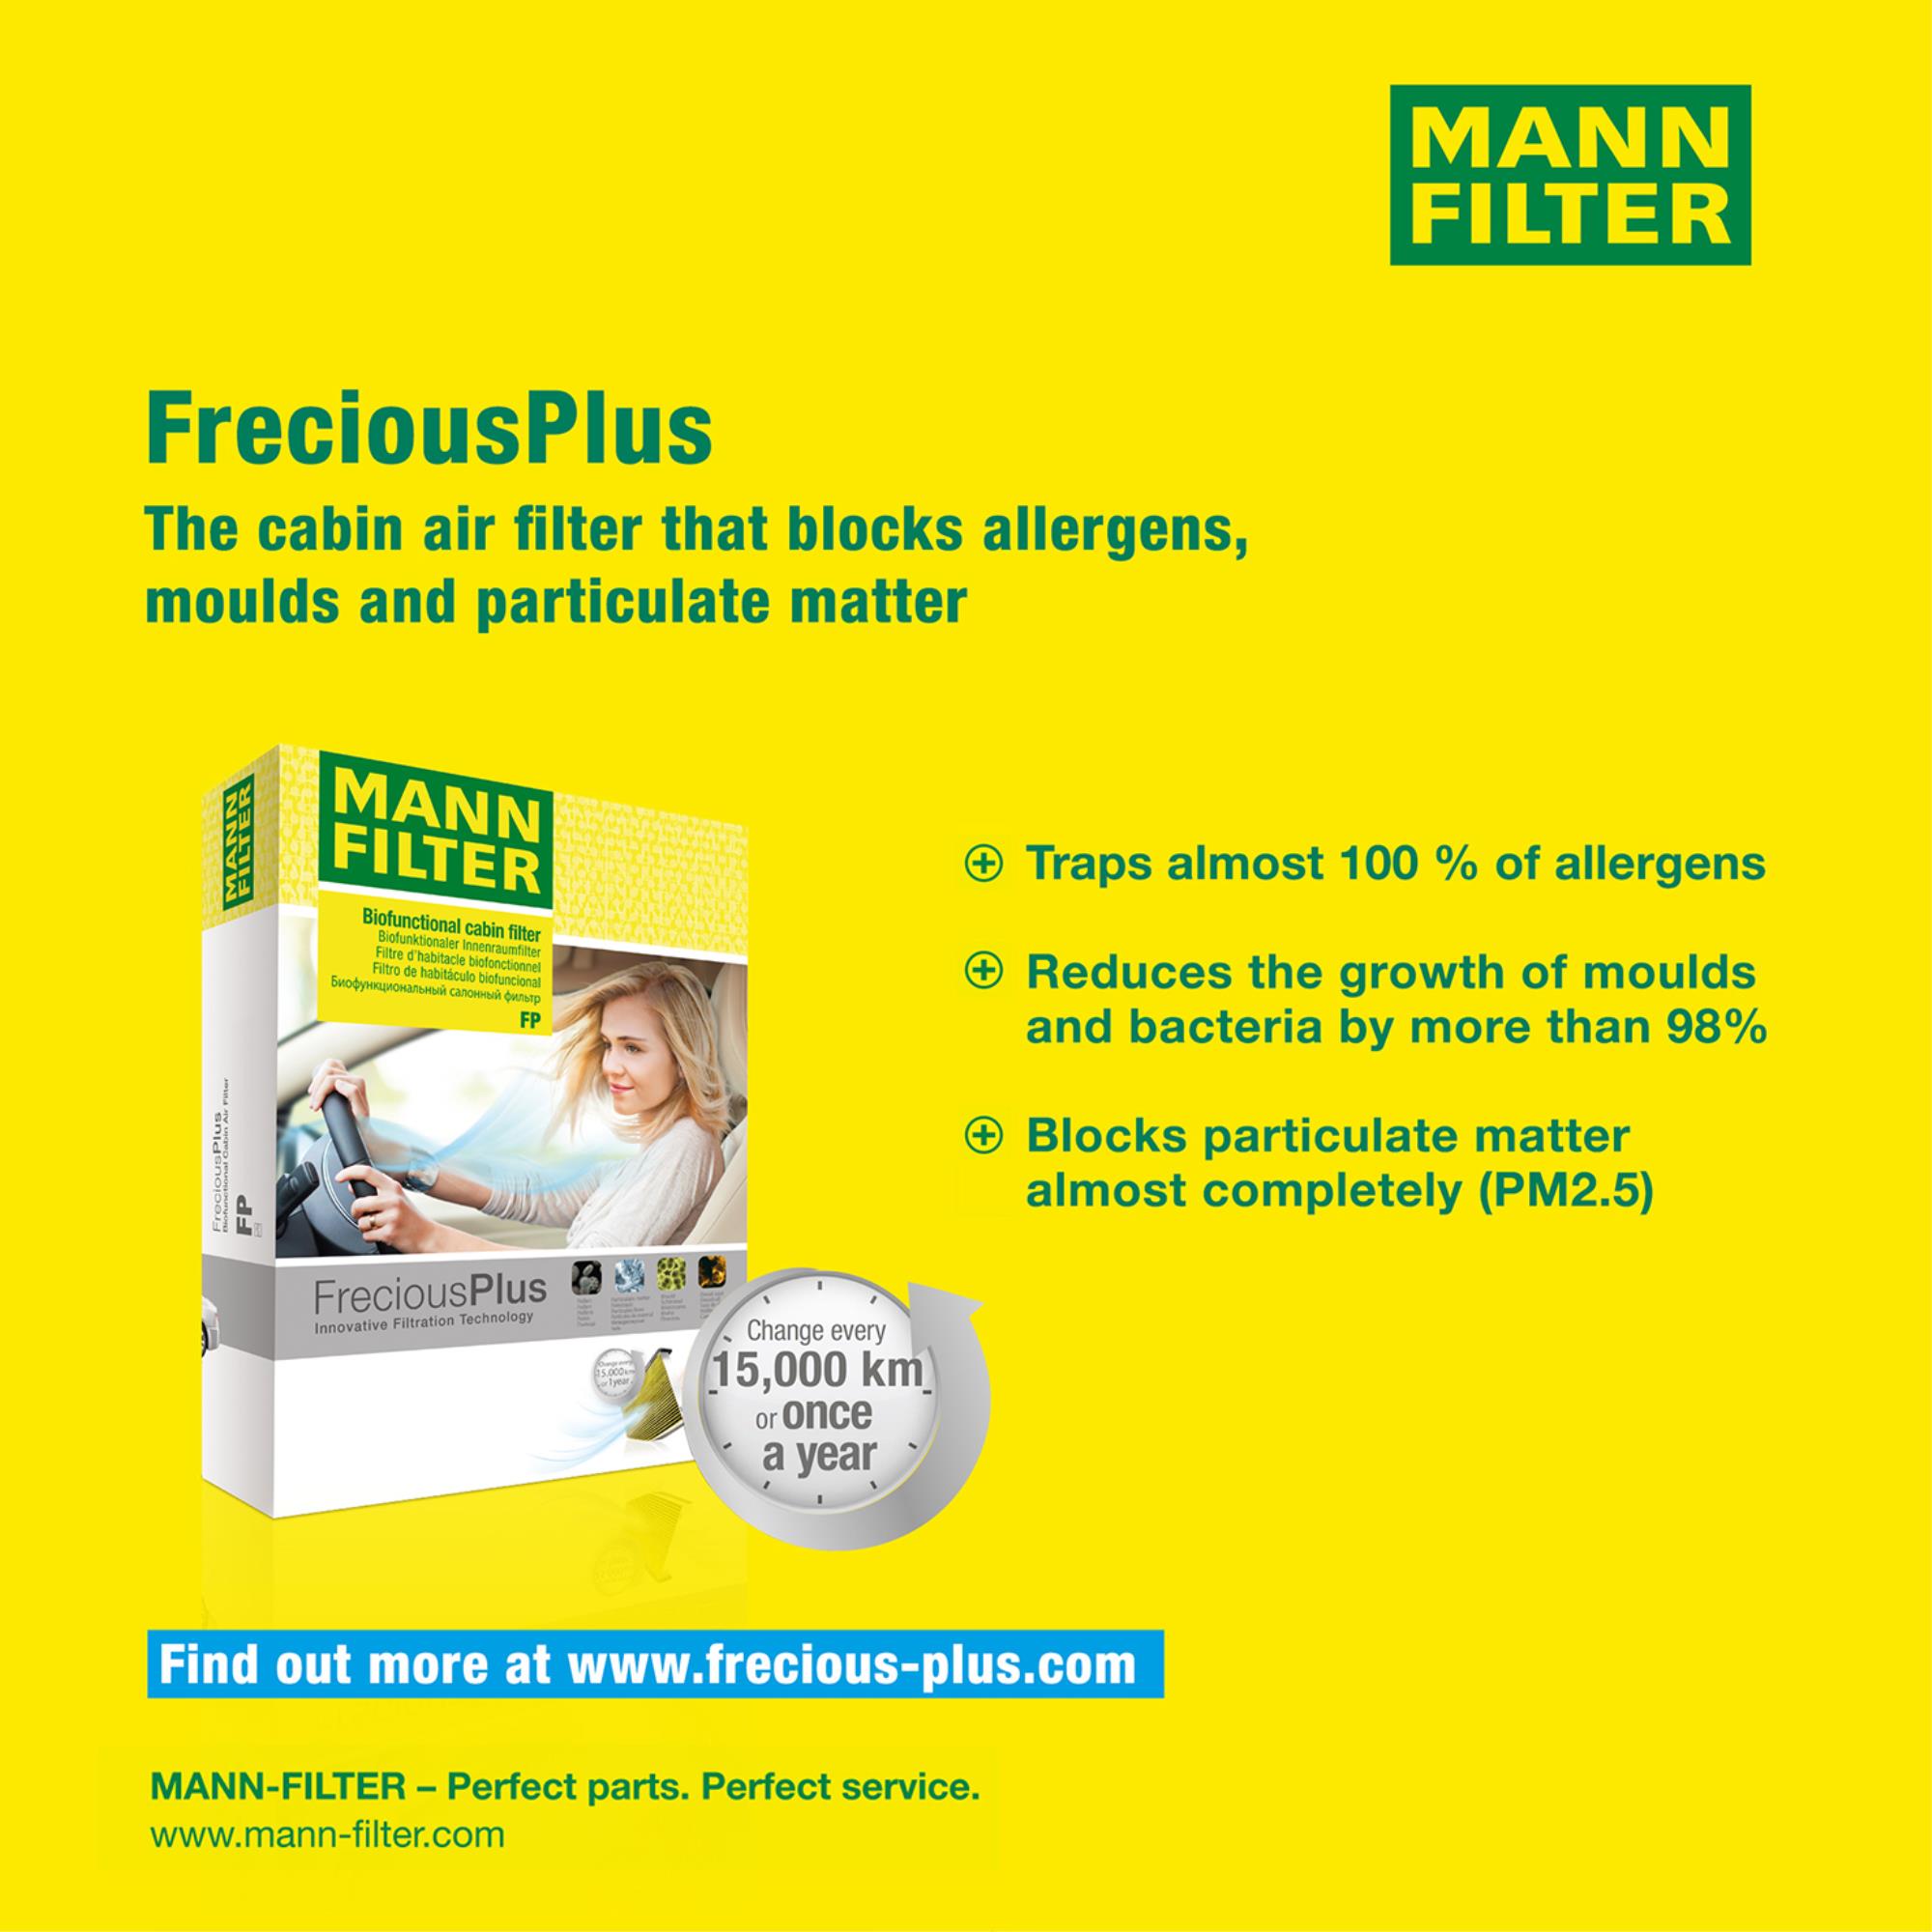 MANN-Filter Innenraumfilter Biofunctional für Allergiker FP 25 001